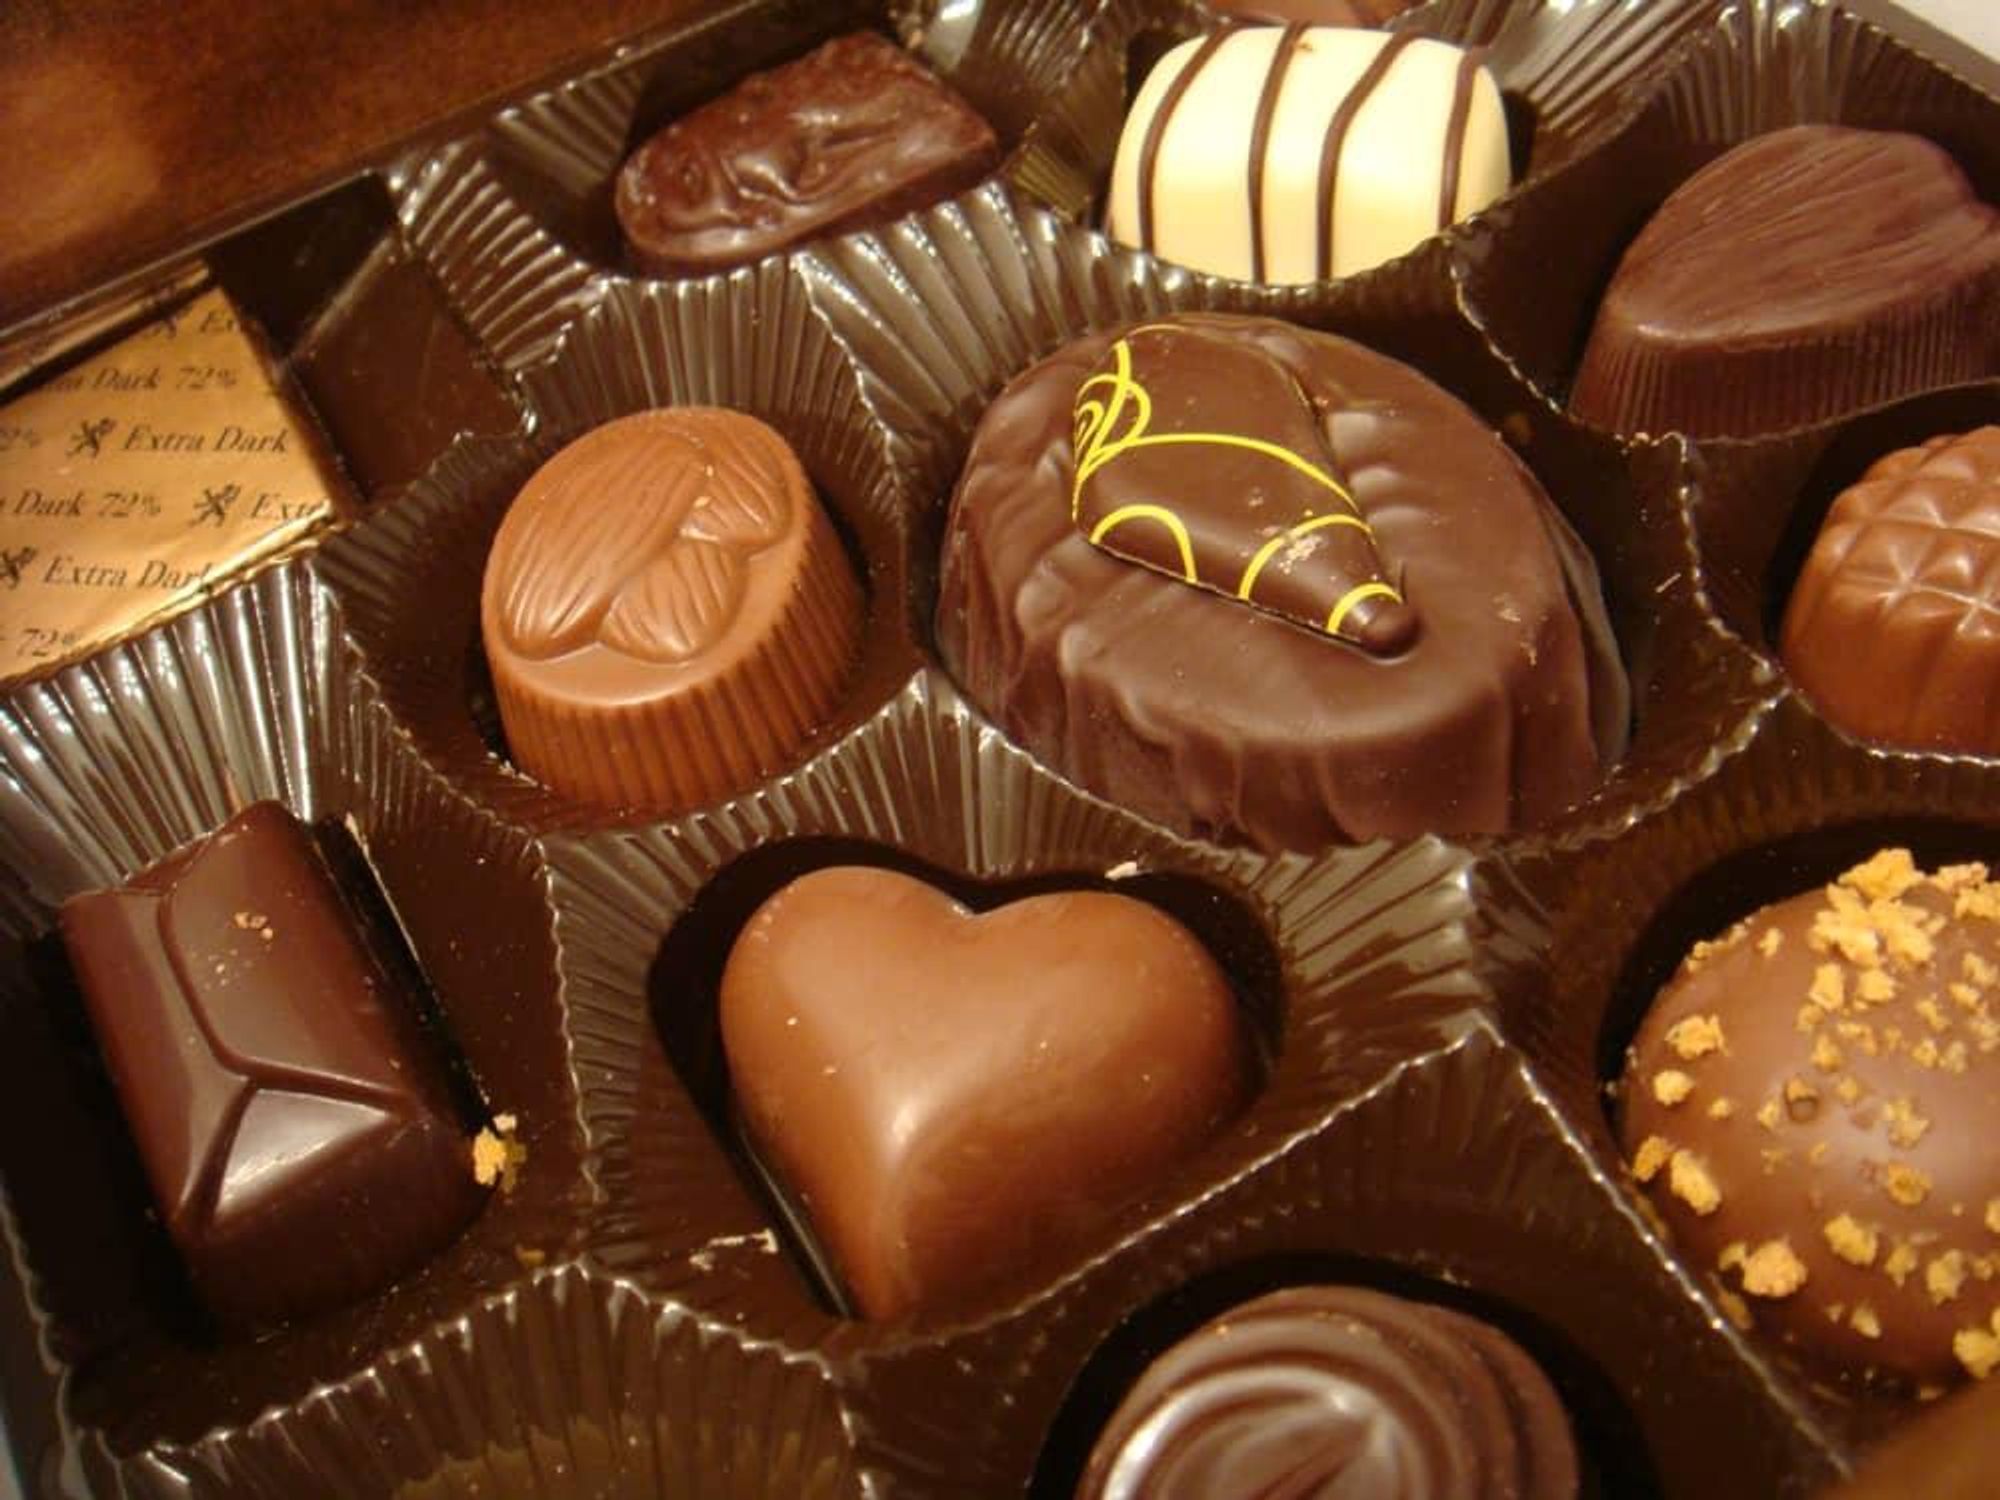 Chocolate Lovers Unite